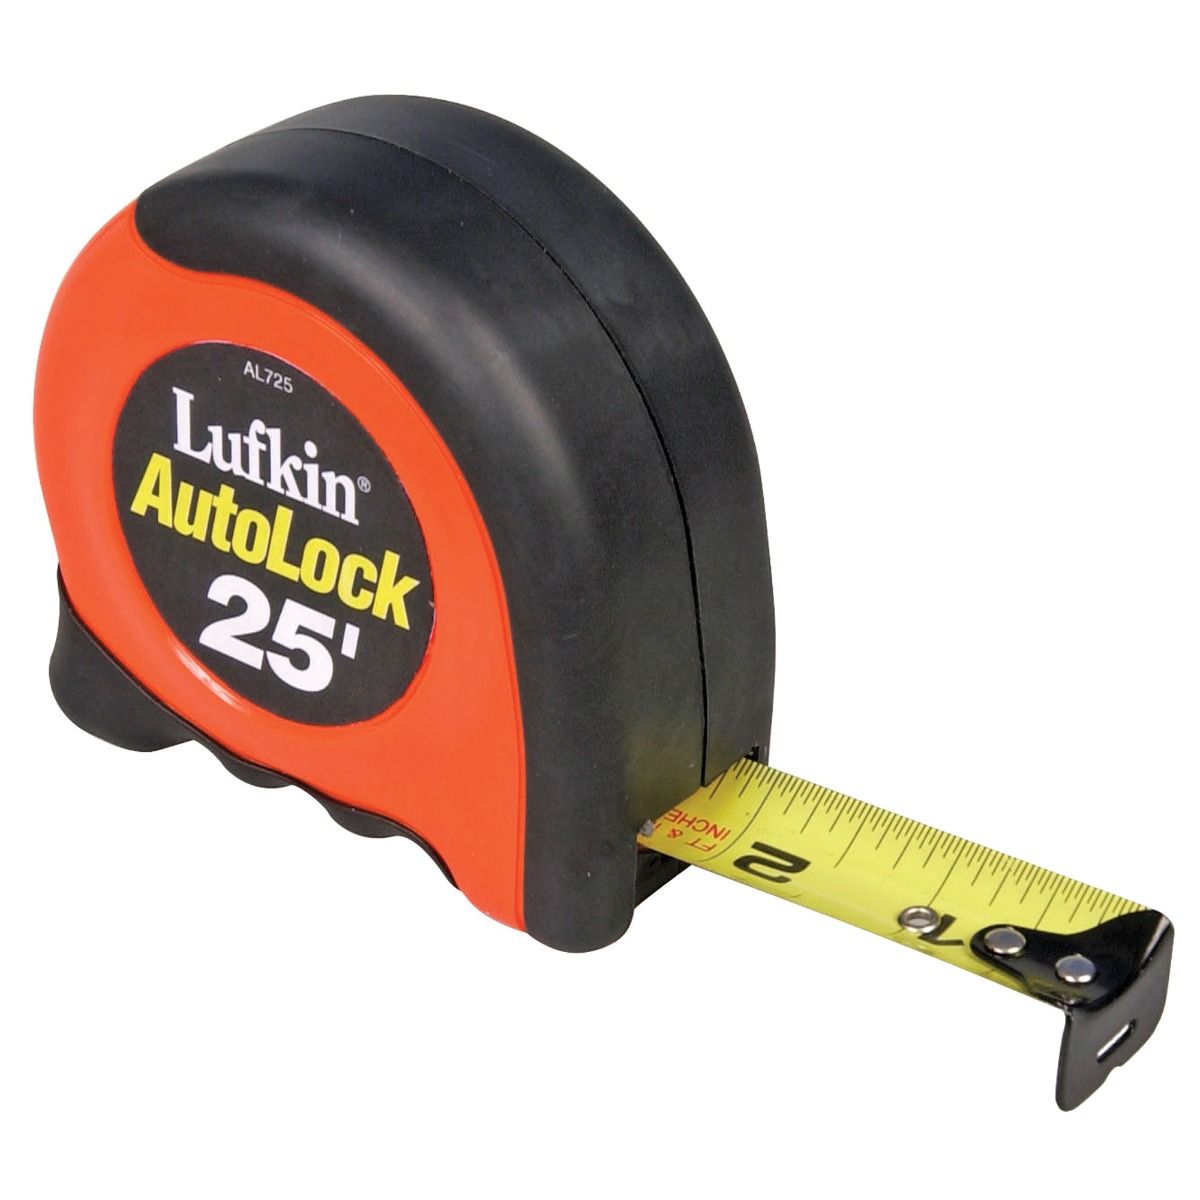 Lufkin Measuring Tape Autolock 1" x 25'